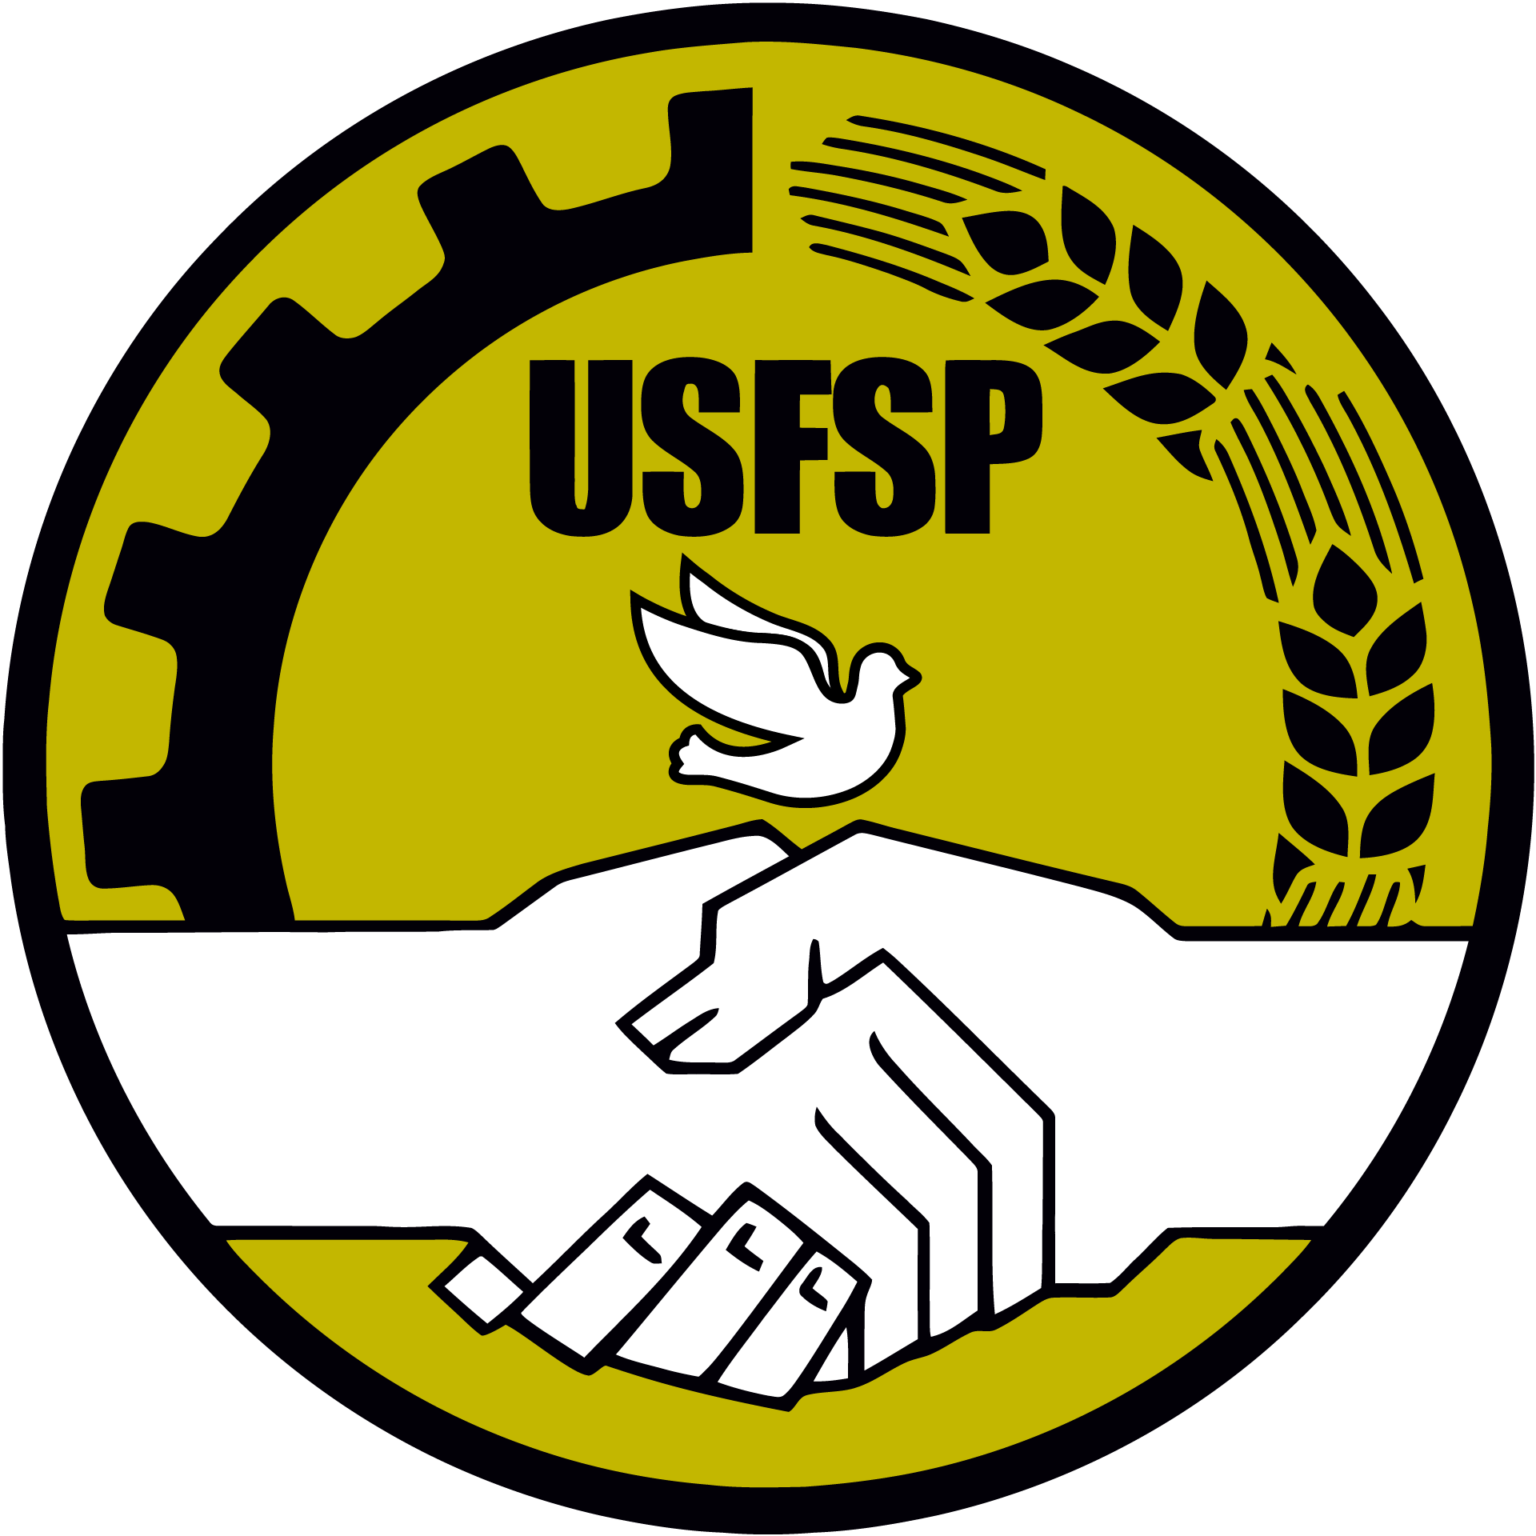 USFSP.png